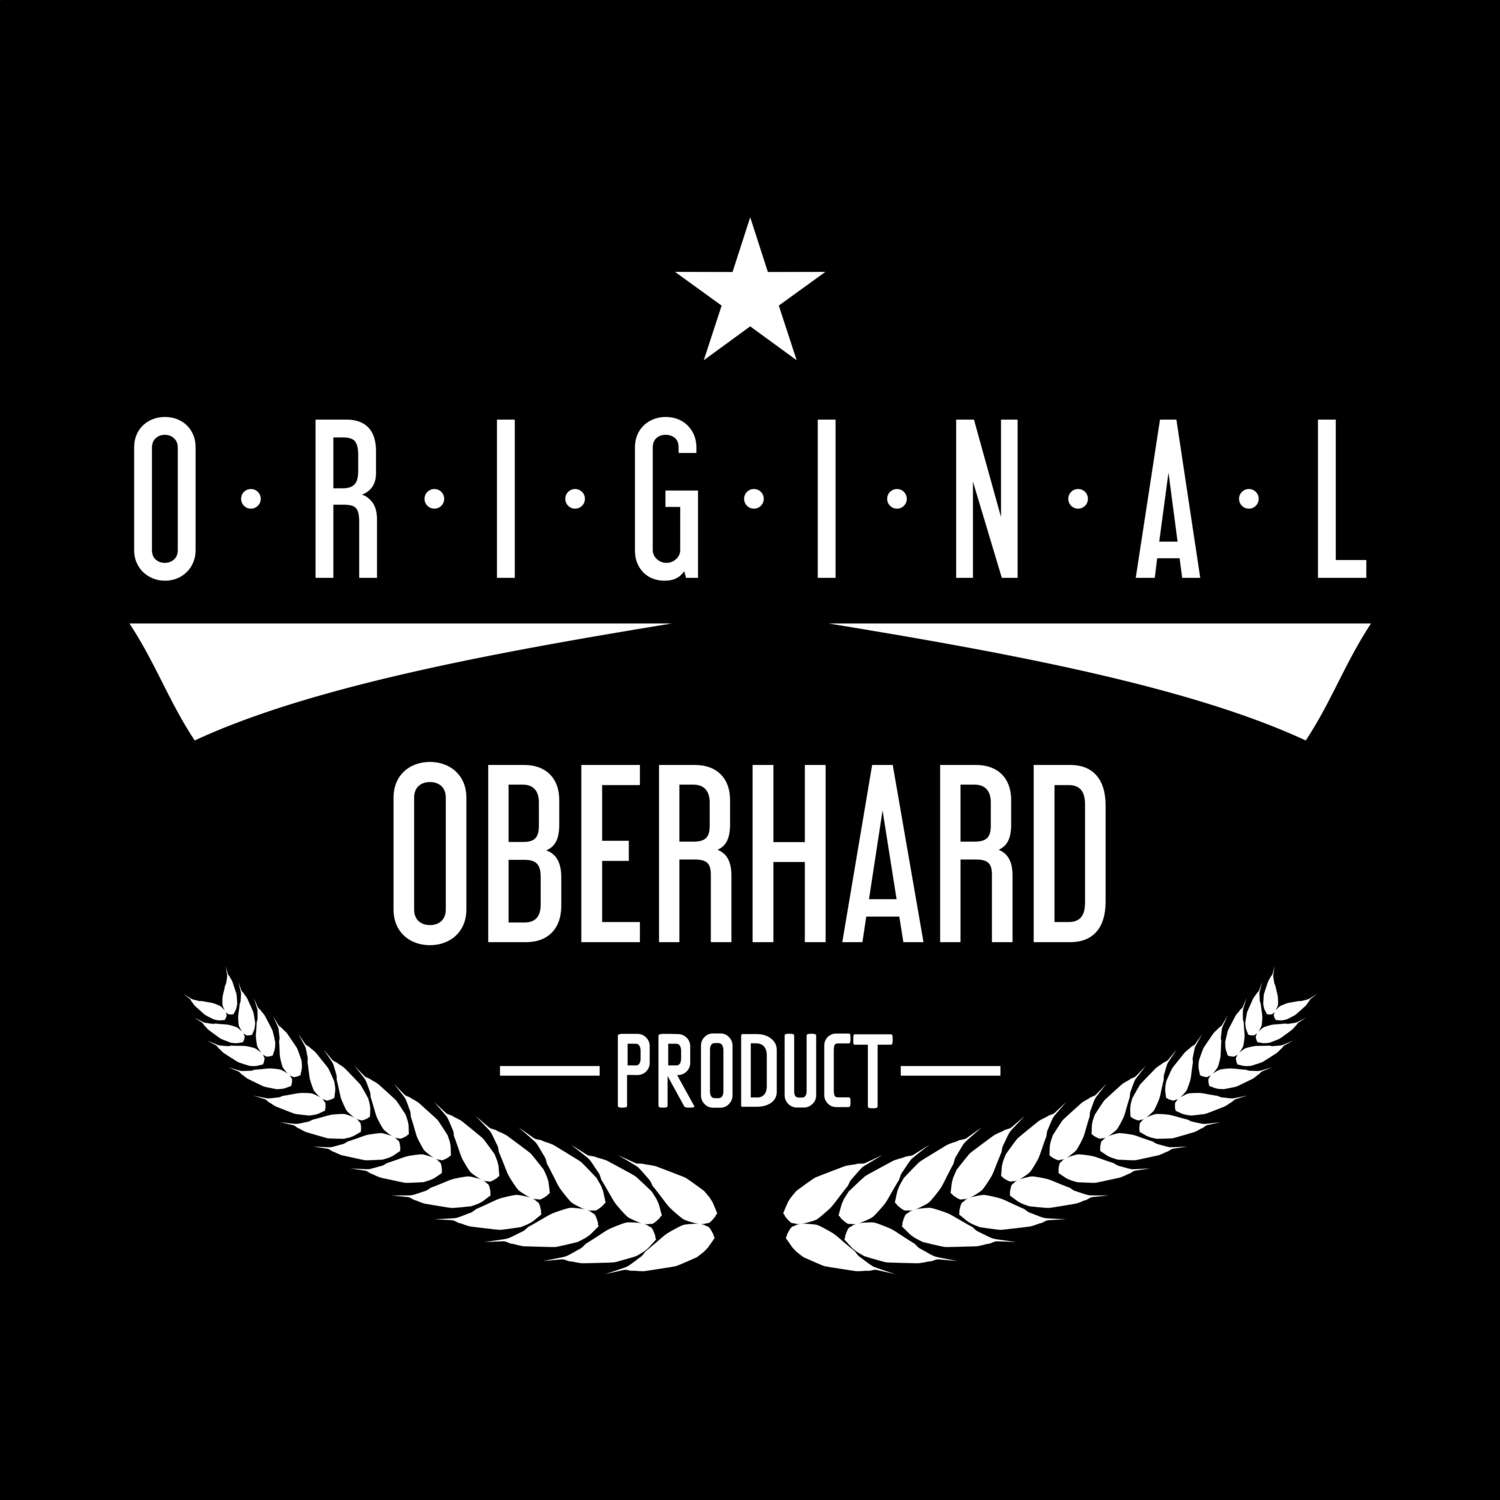 Oberhard T-Shirt »Original Product«